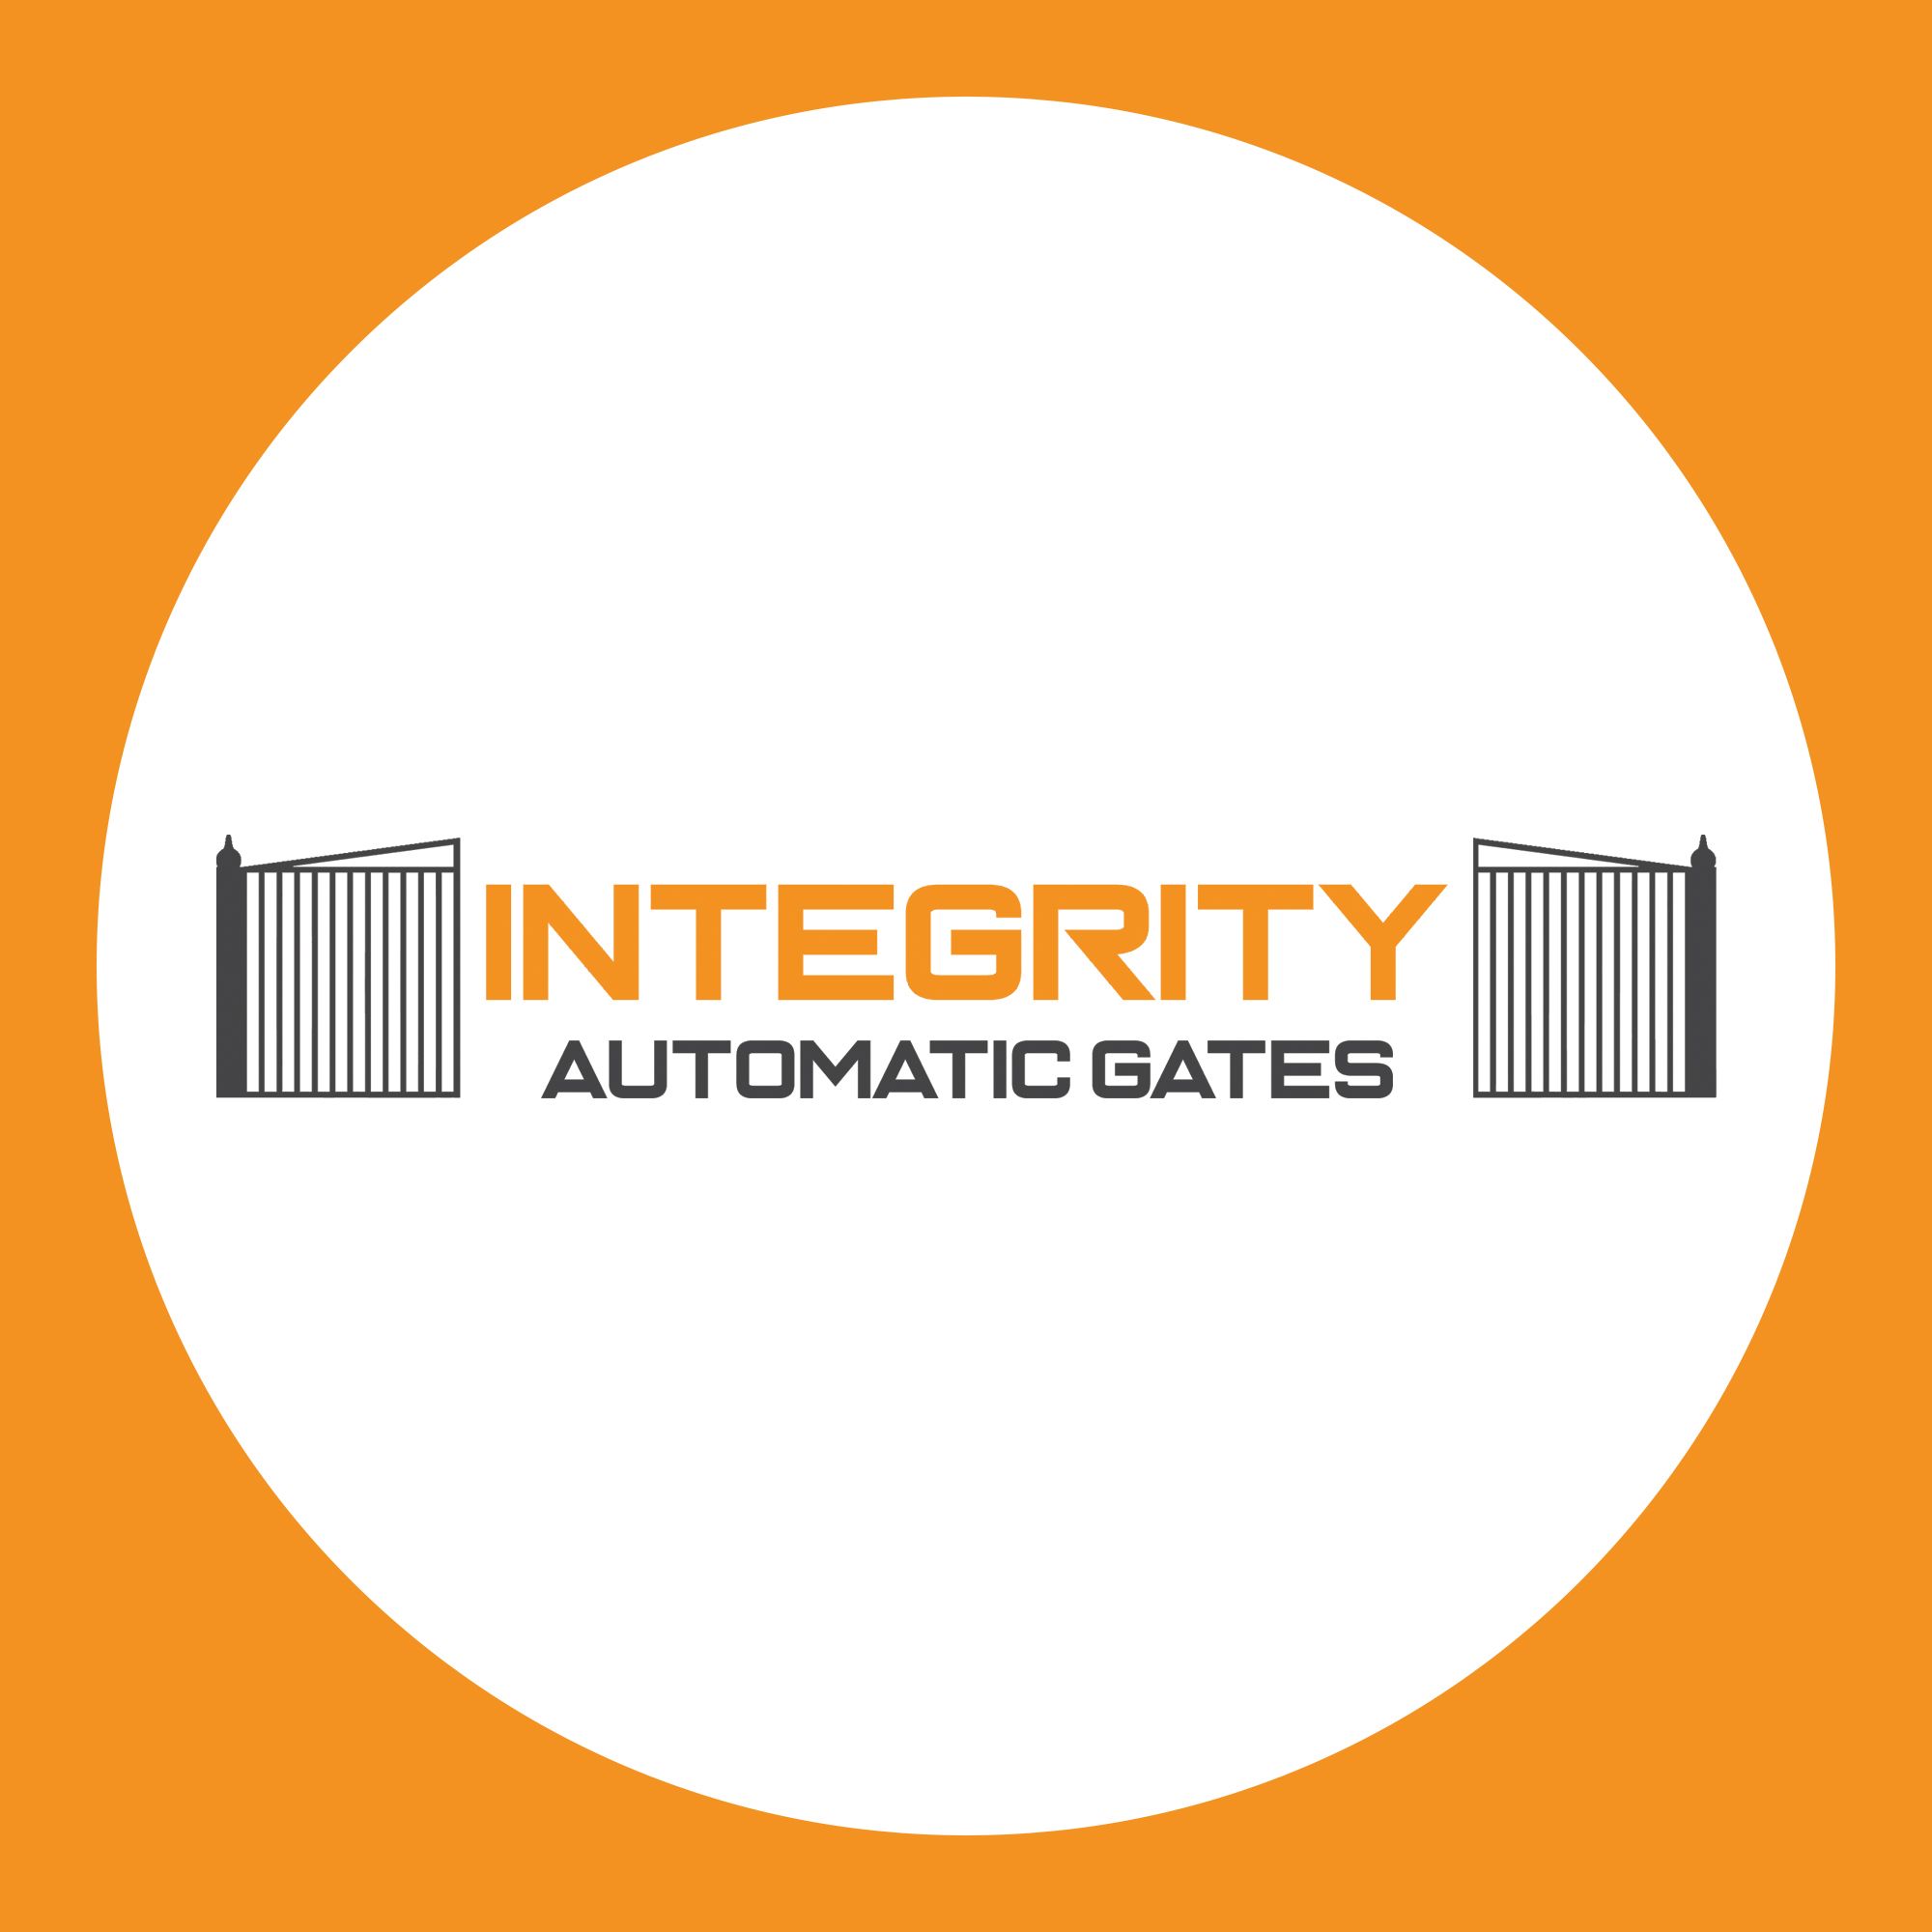 (c) Integrityautomaticgates.com